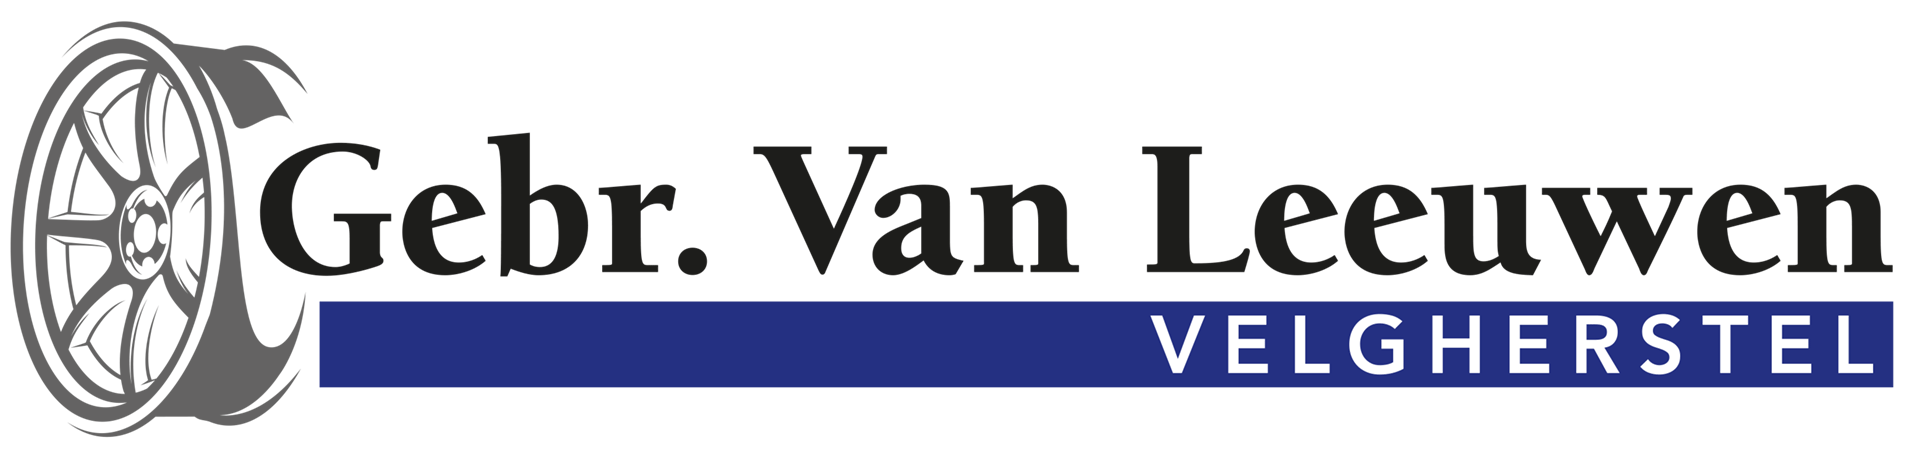 Logo - Van Leeuwen Velgherstel